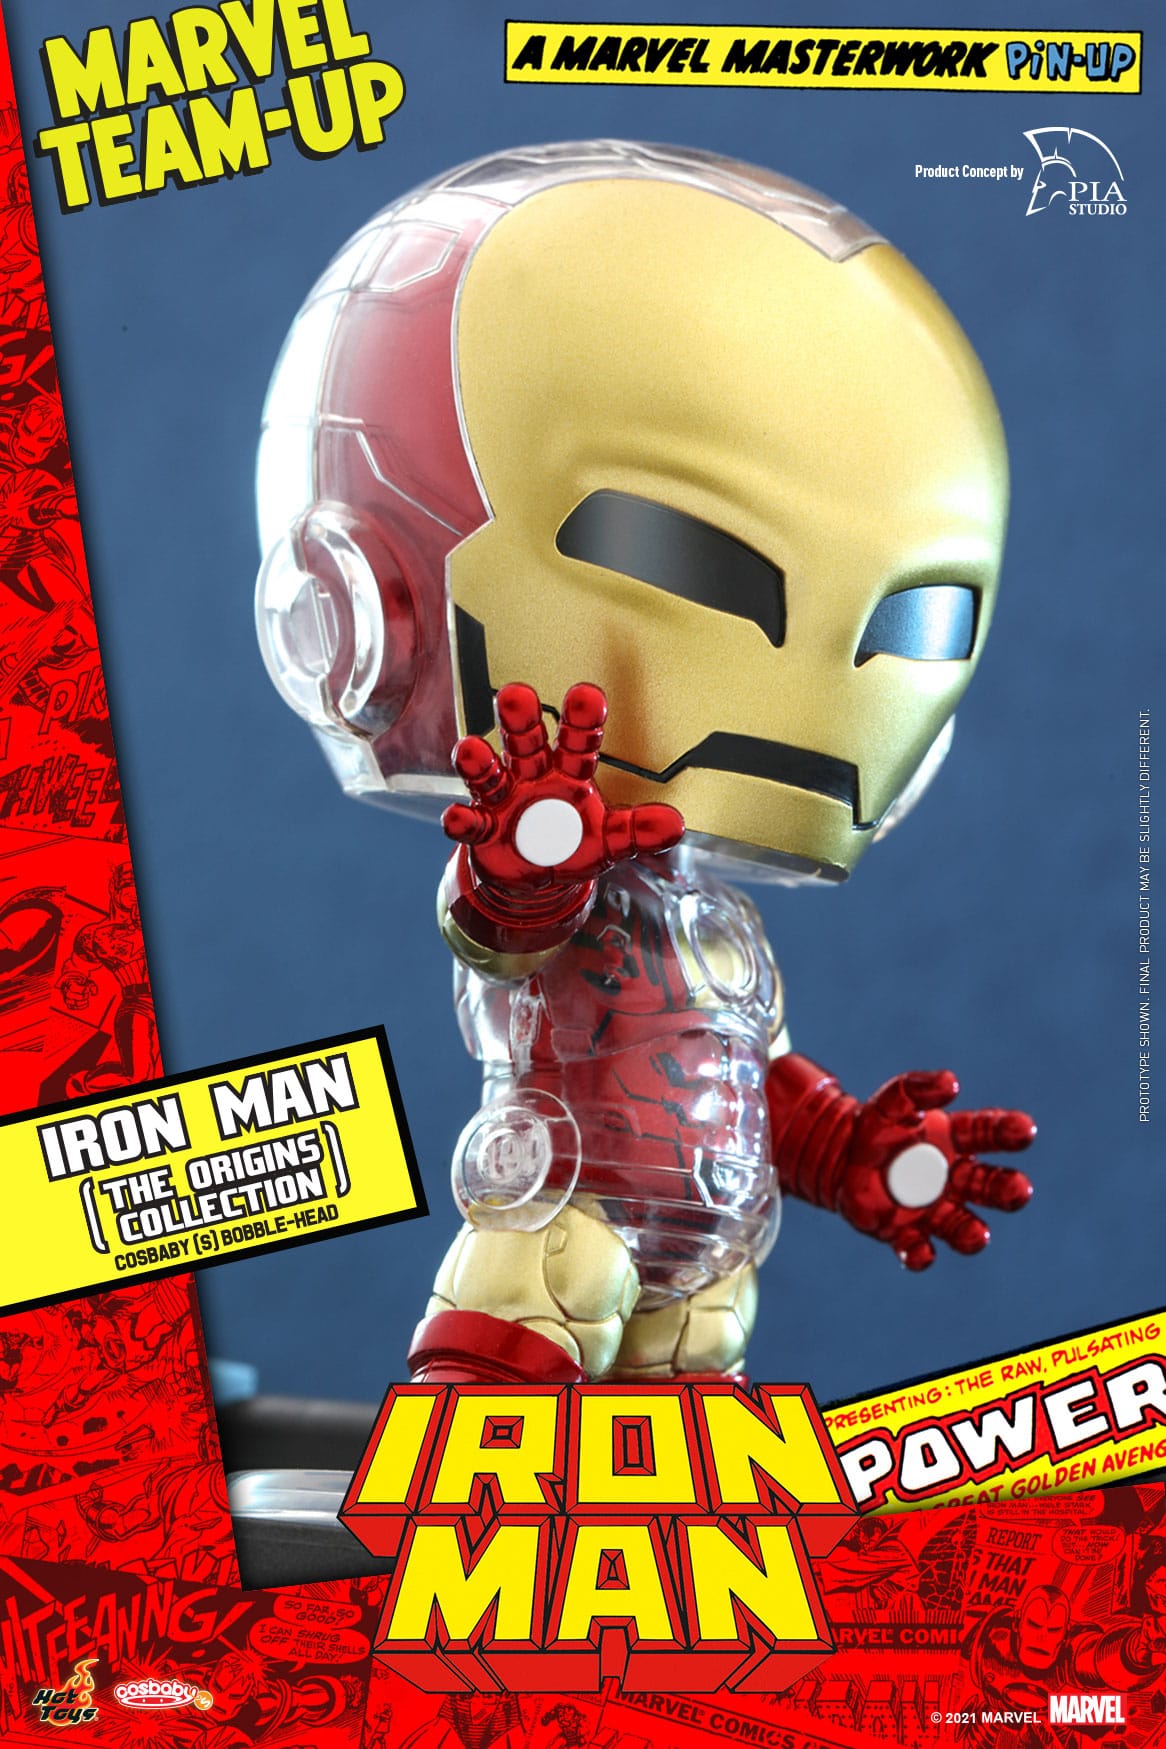 Iron Man (η συλλογή Origins) cosbaby